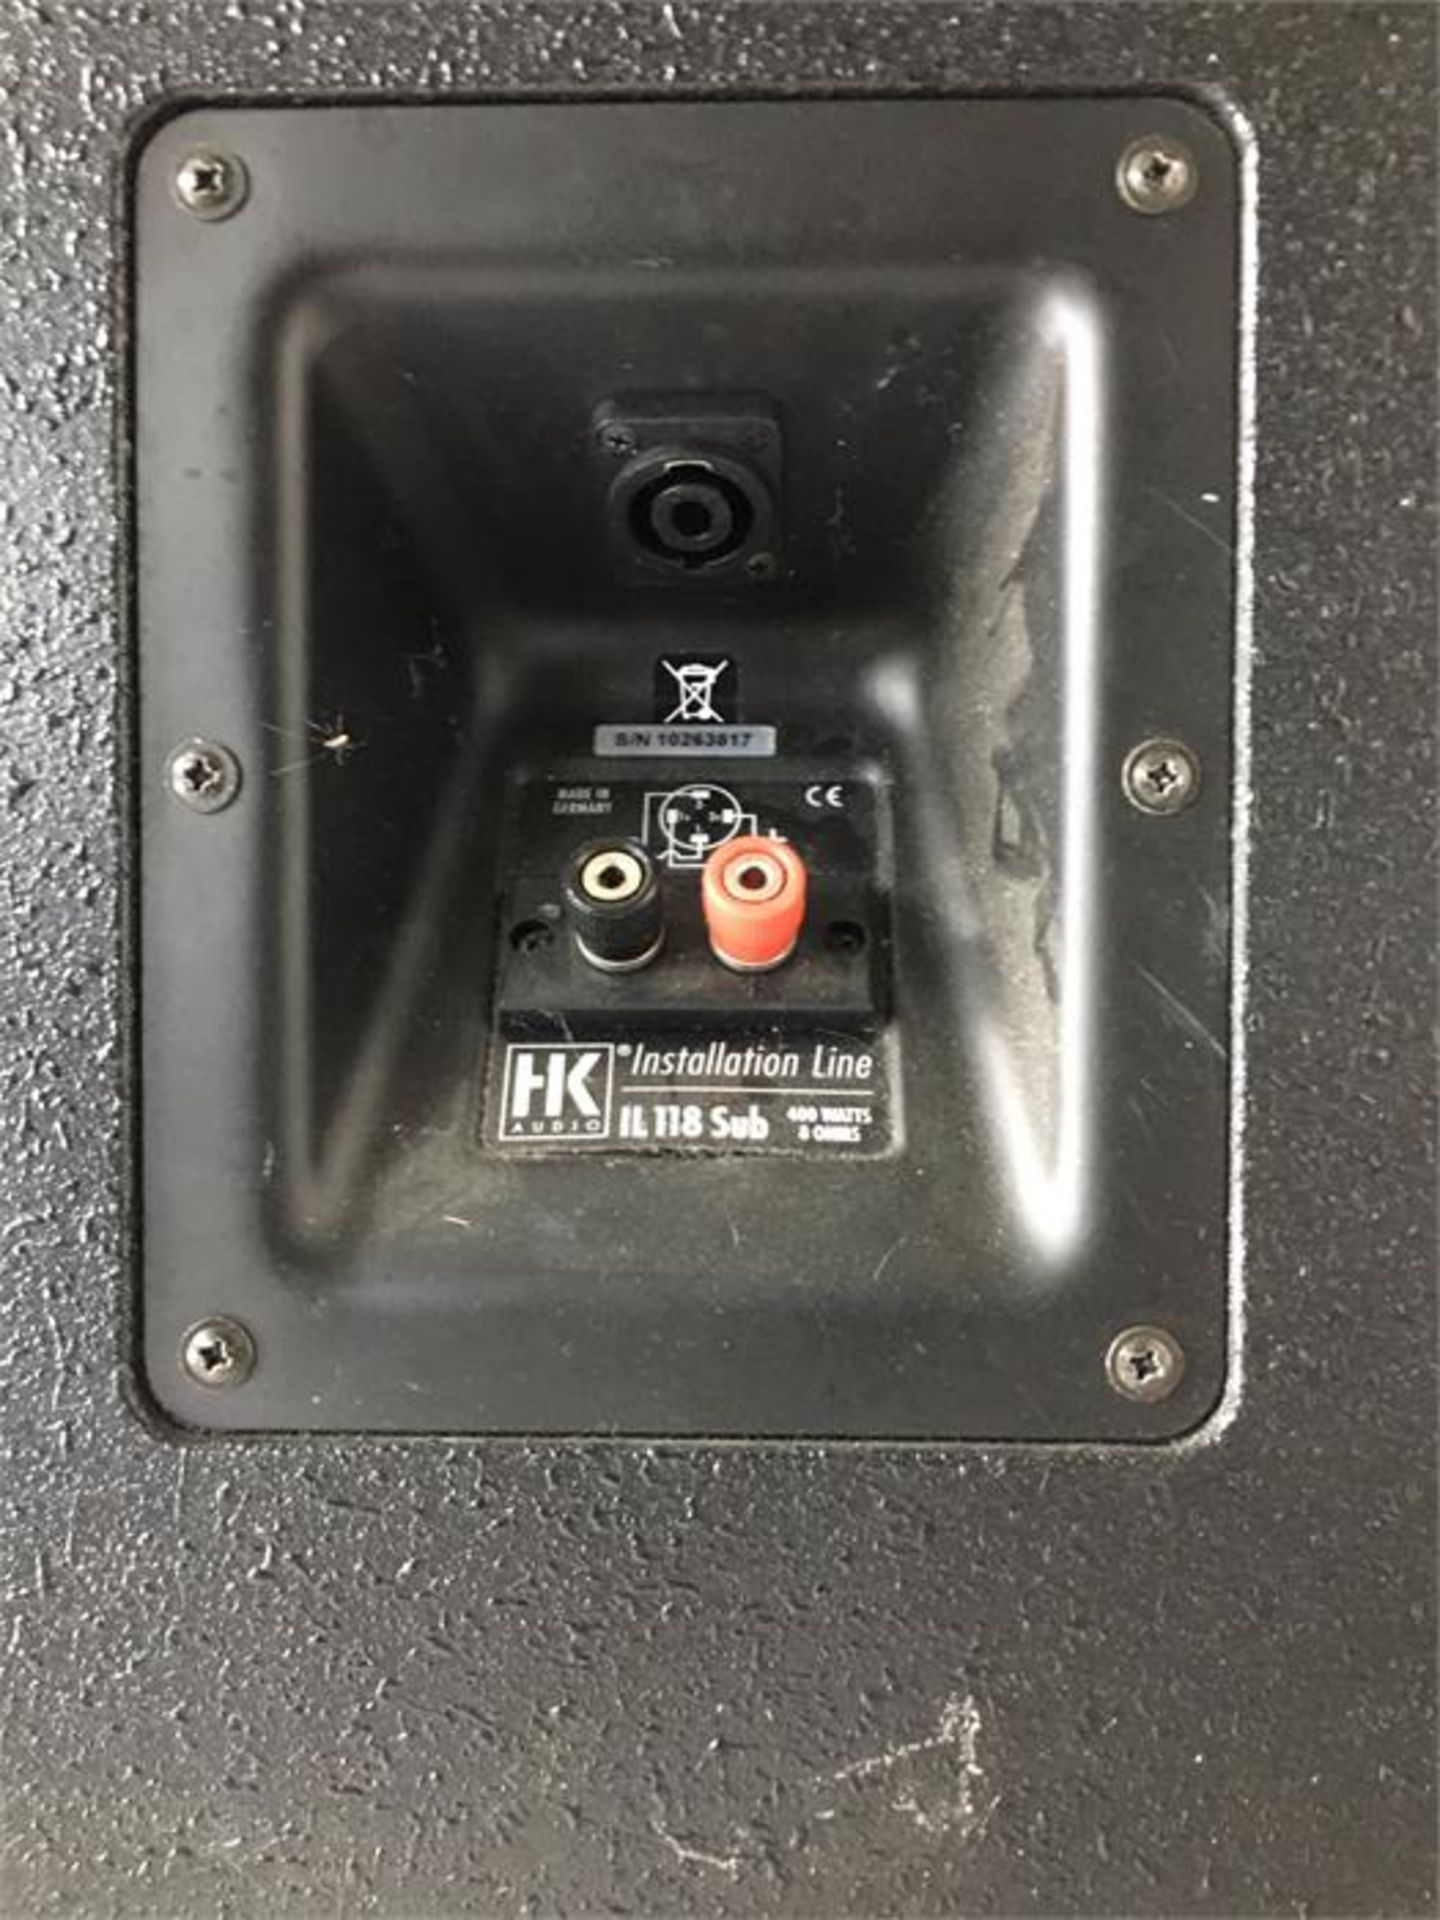 HK Audio installation line IL 118 sub 400 - 1600w 8ohms subwoofer - Image 3 of 3